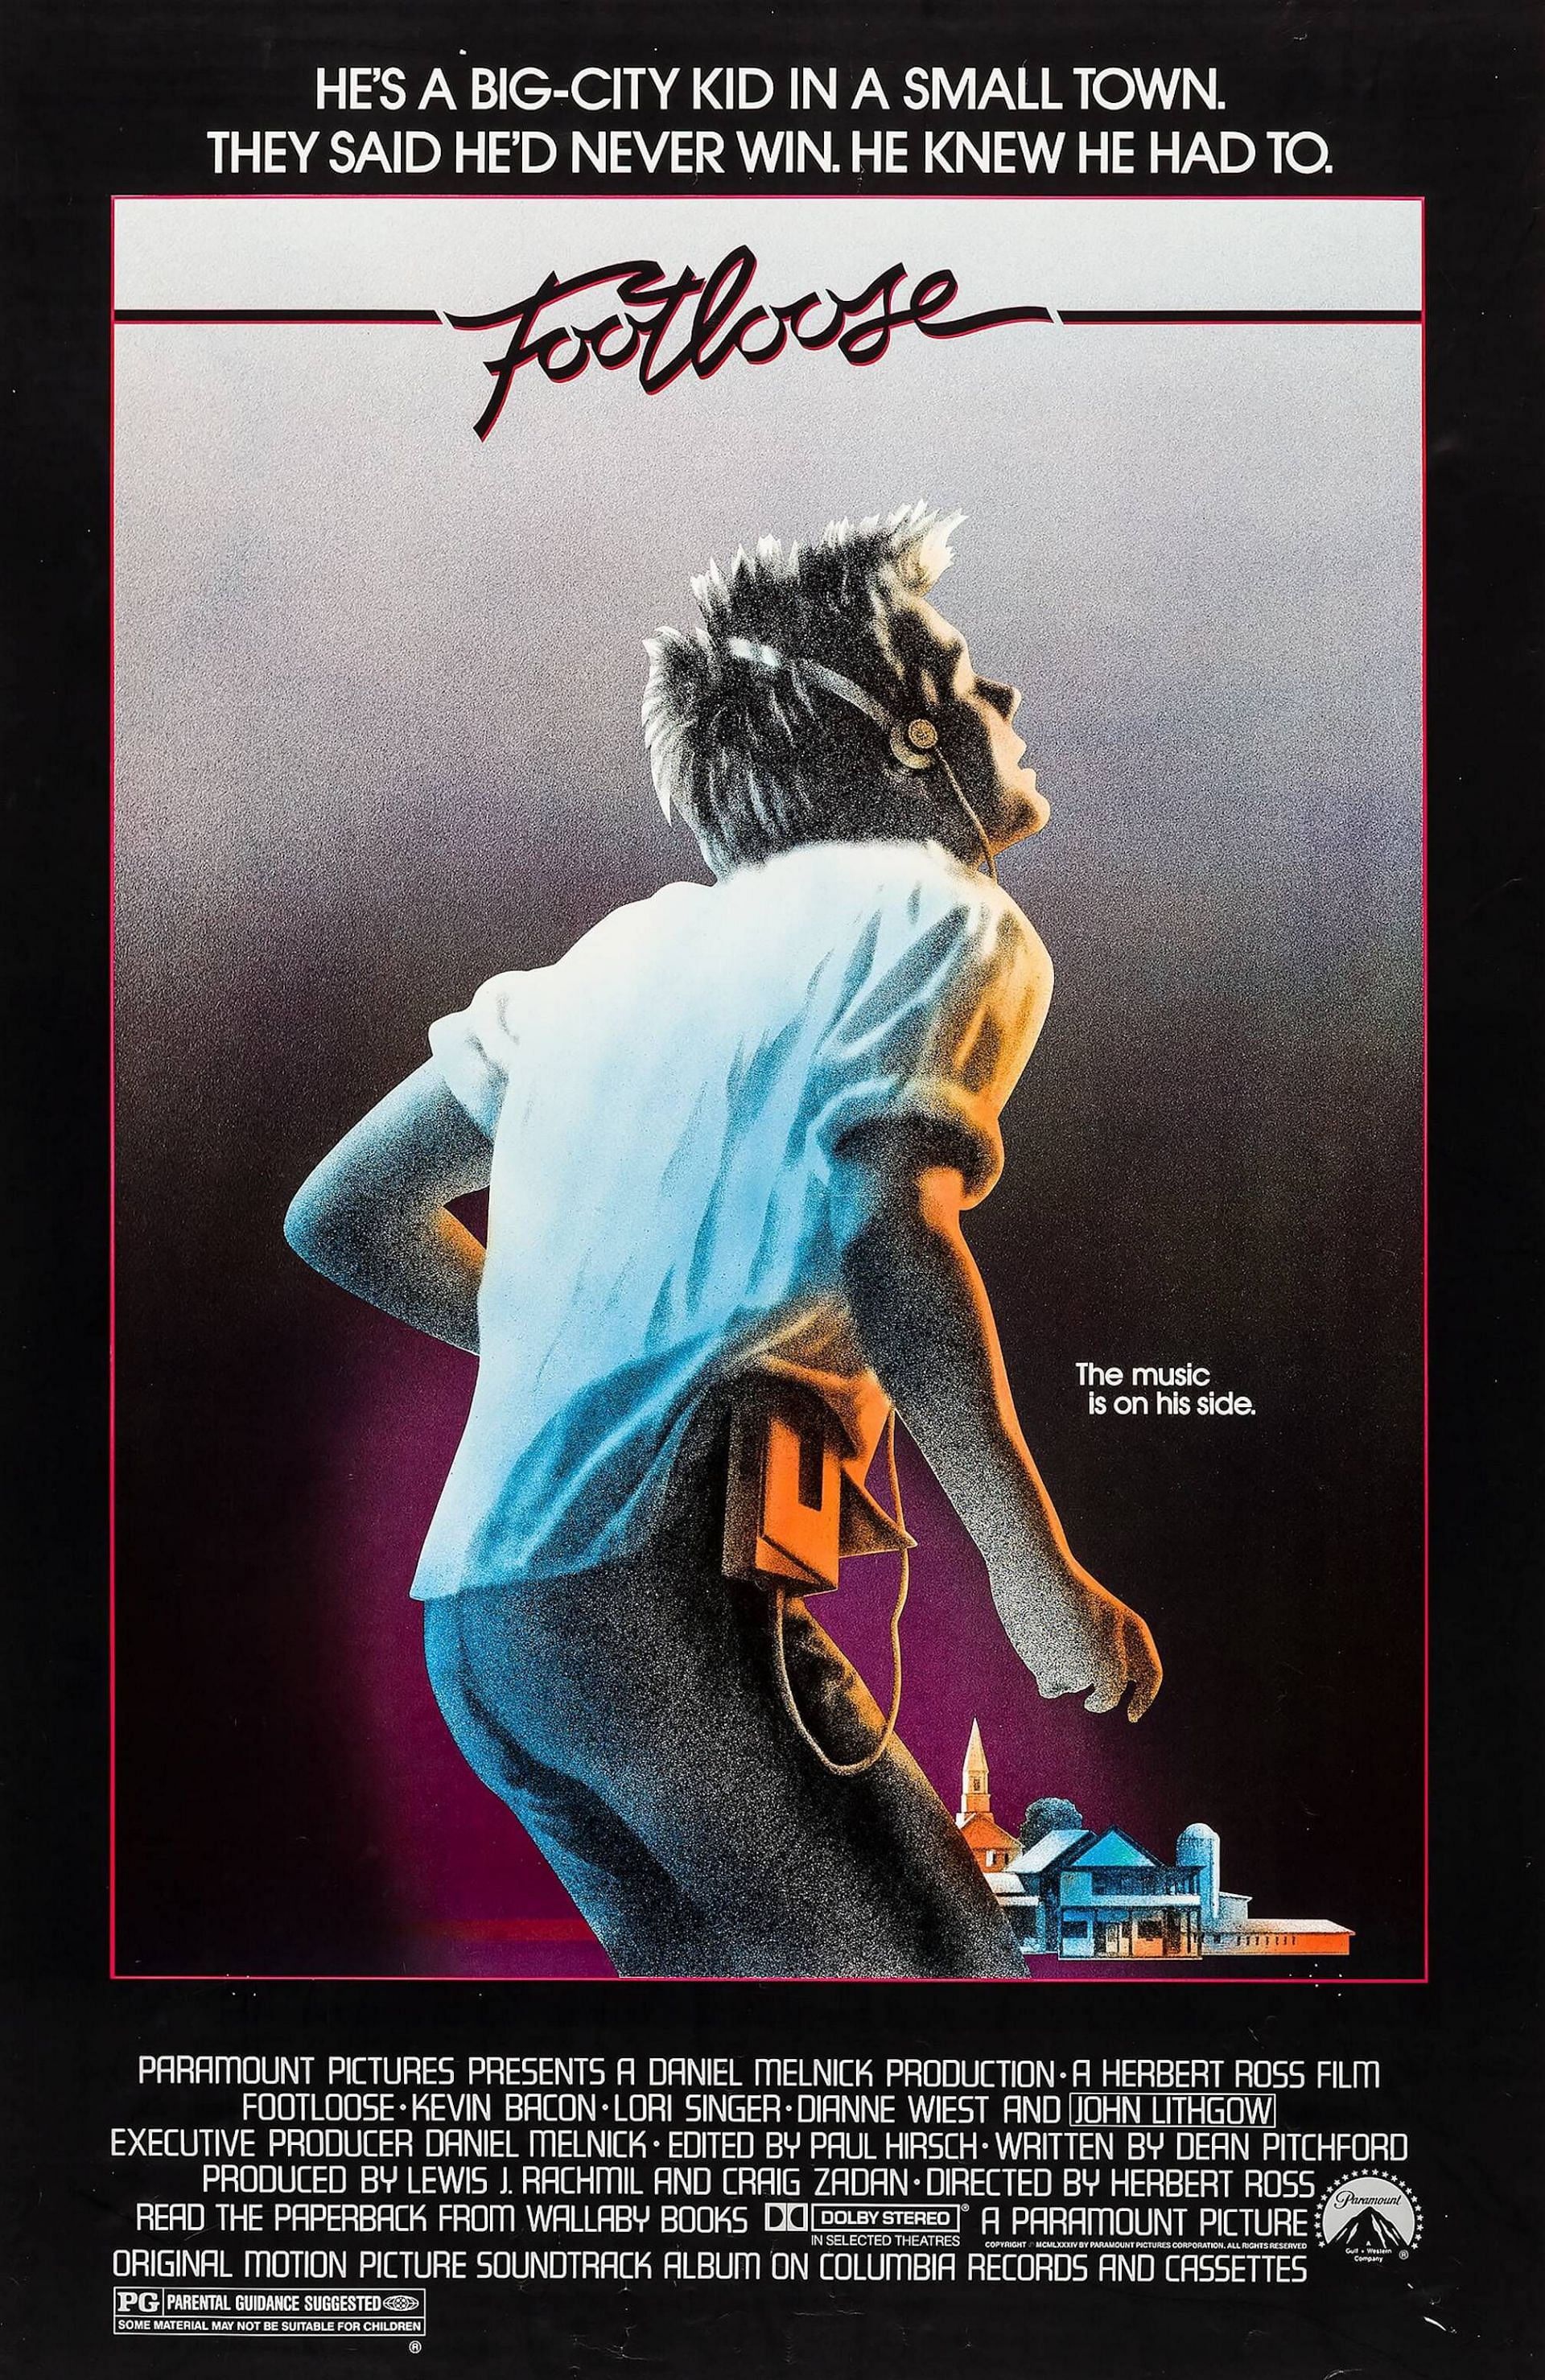 Footloose, 1984 (Image via Paramount)